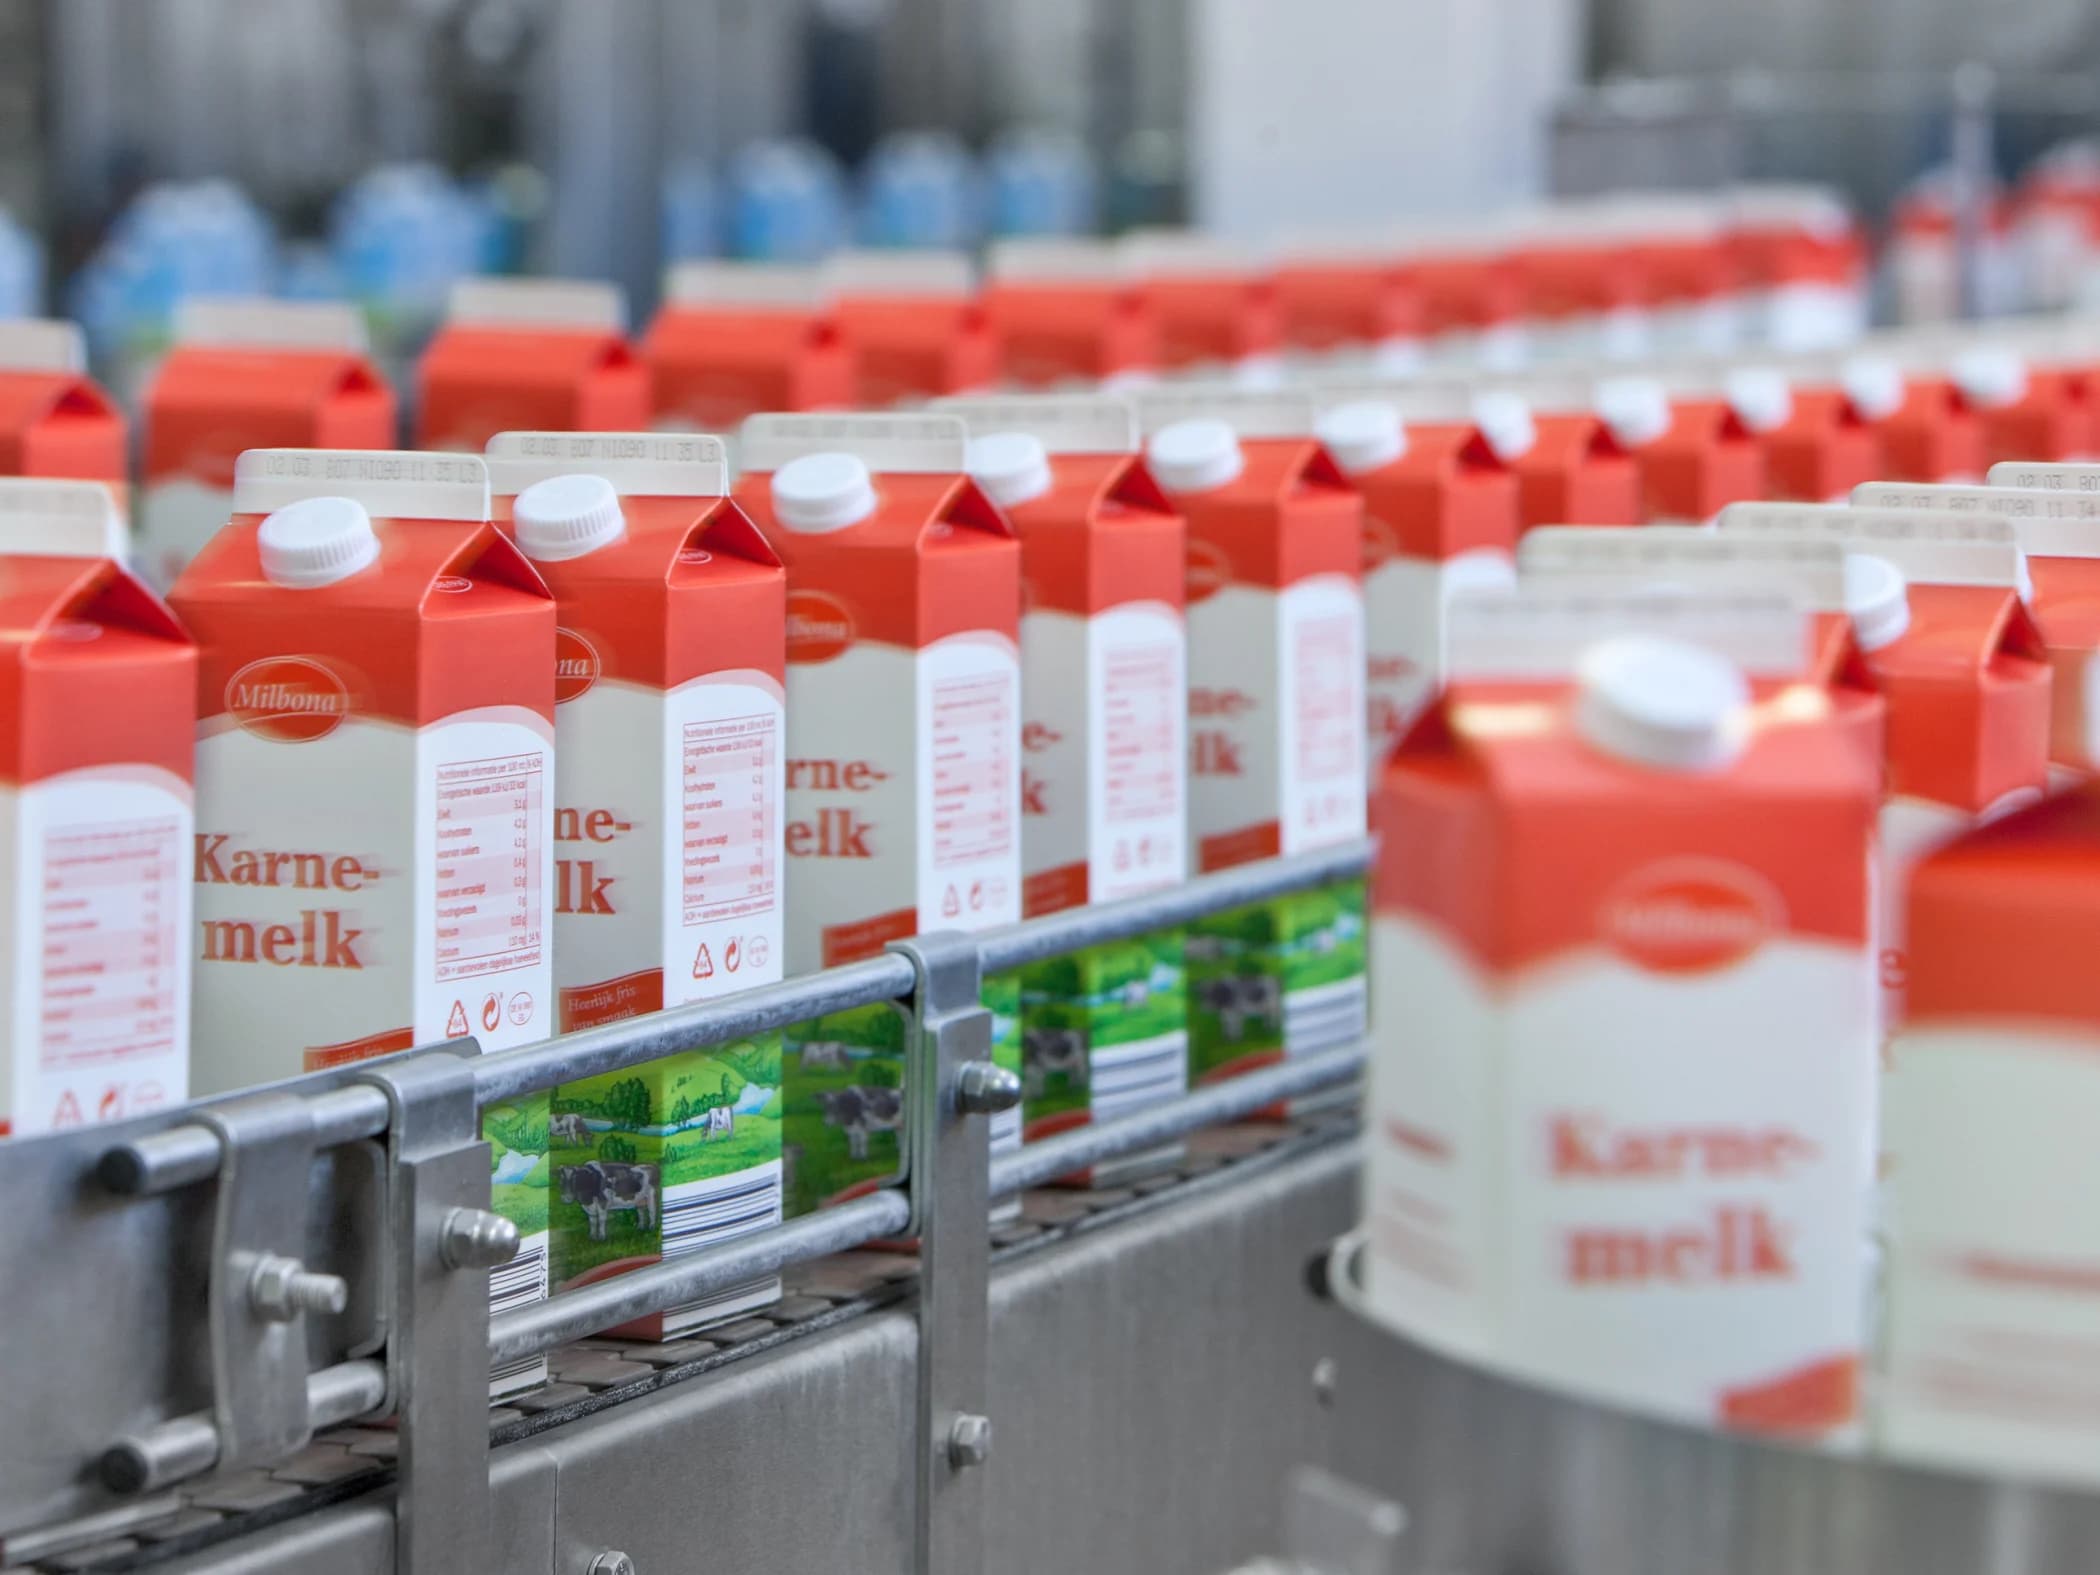 buttermilk-cartons-onveyer-belt-dairy-production-facility